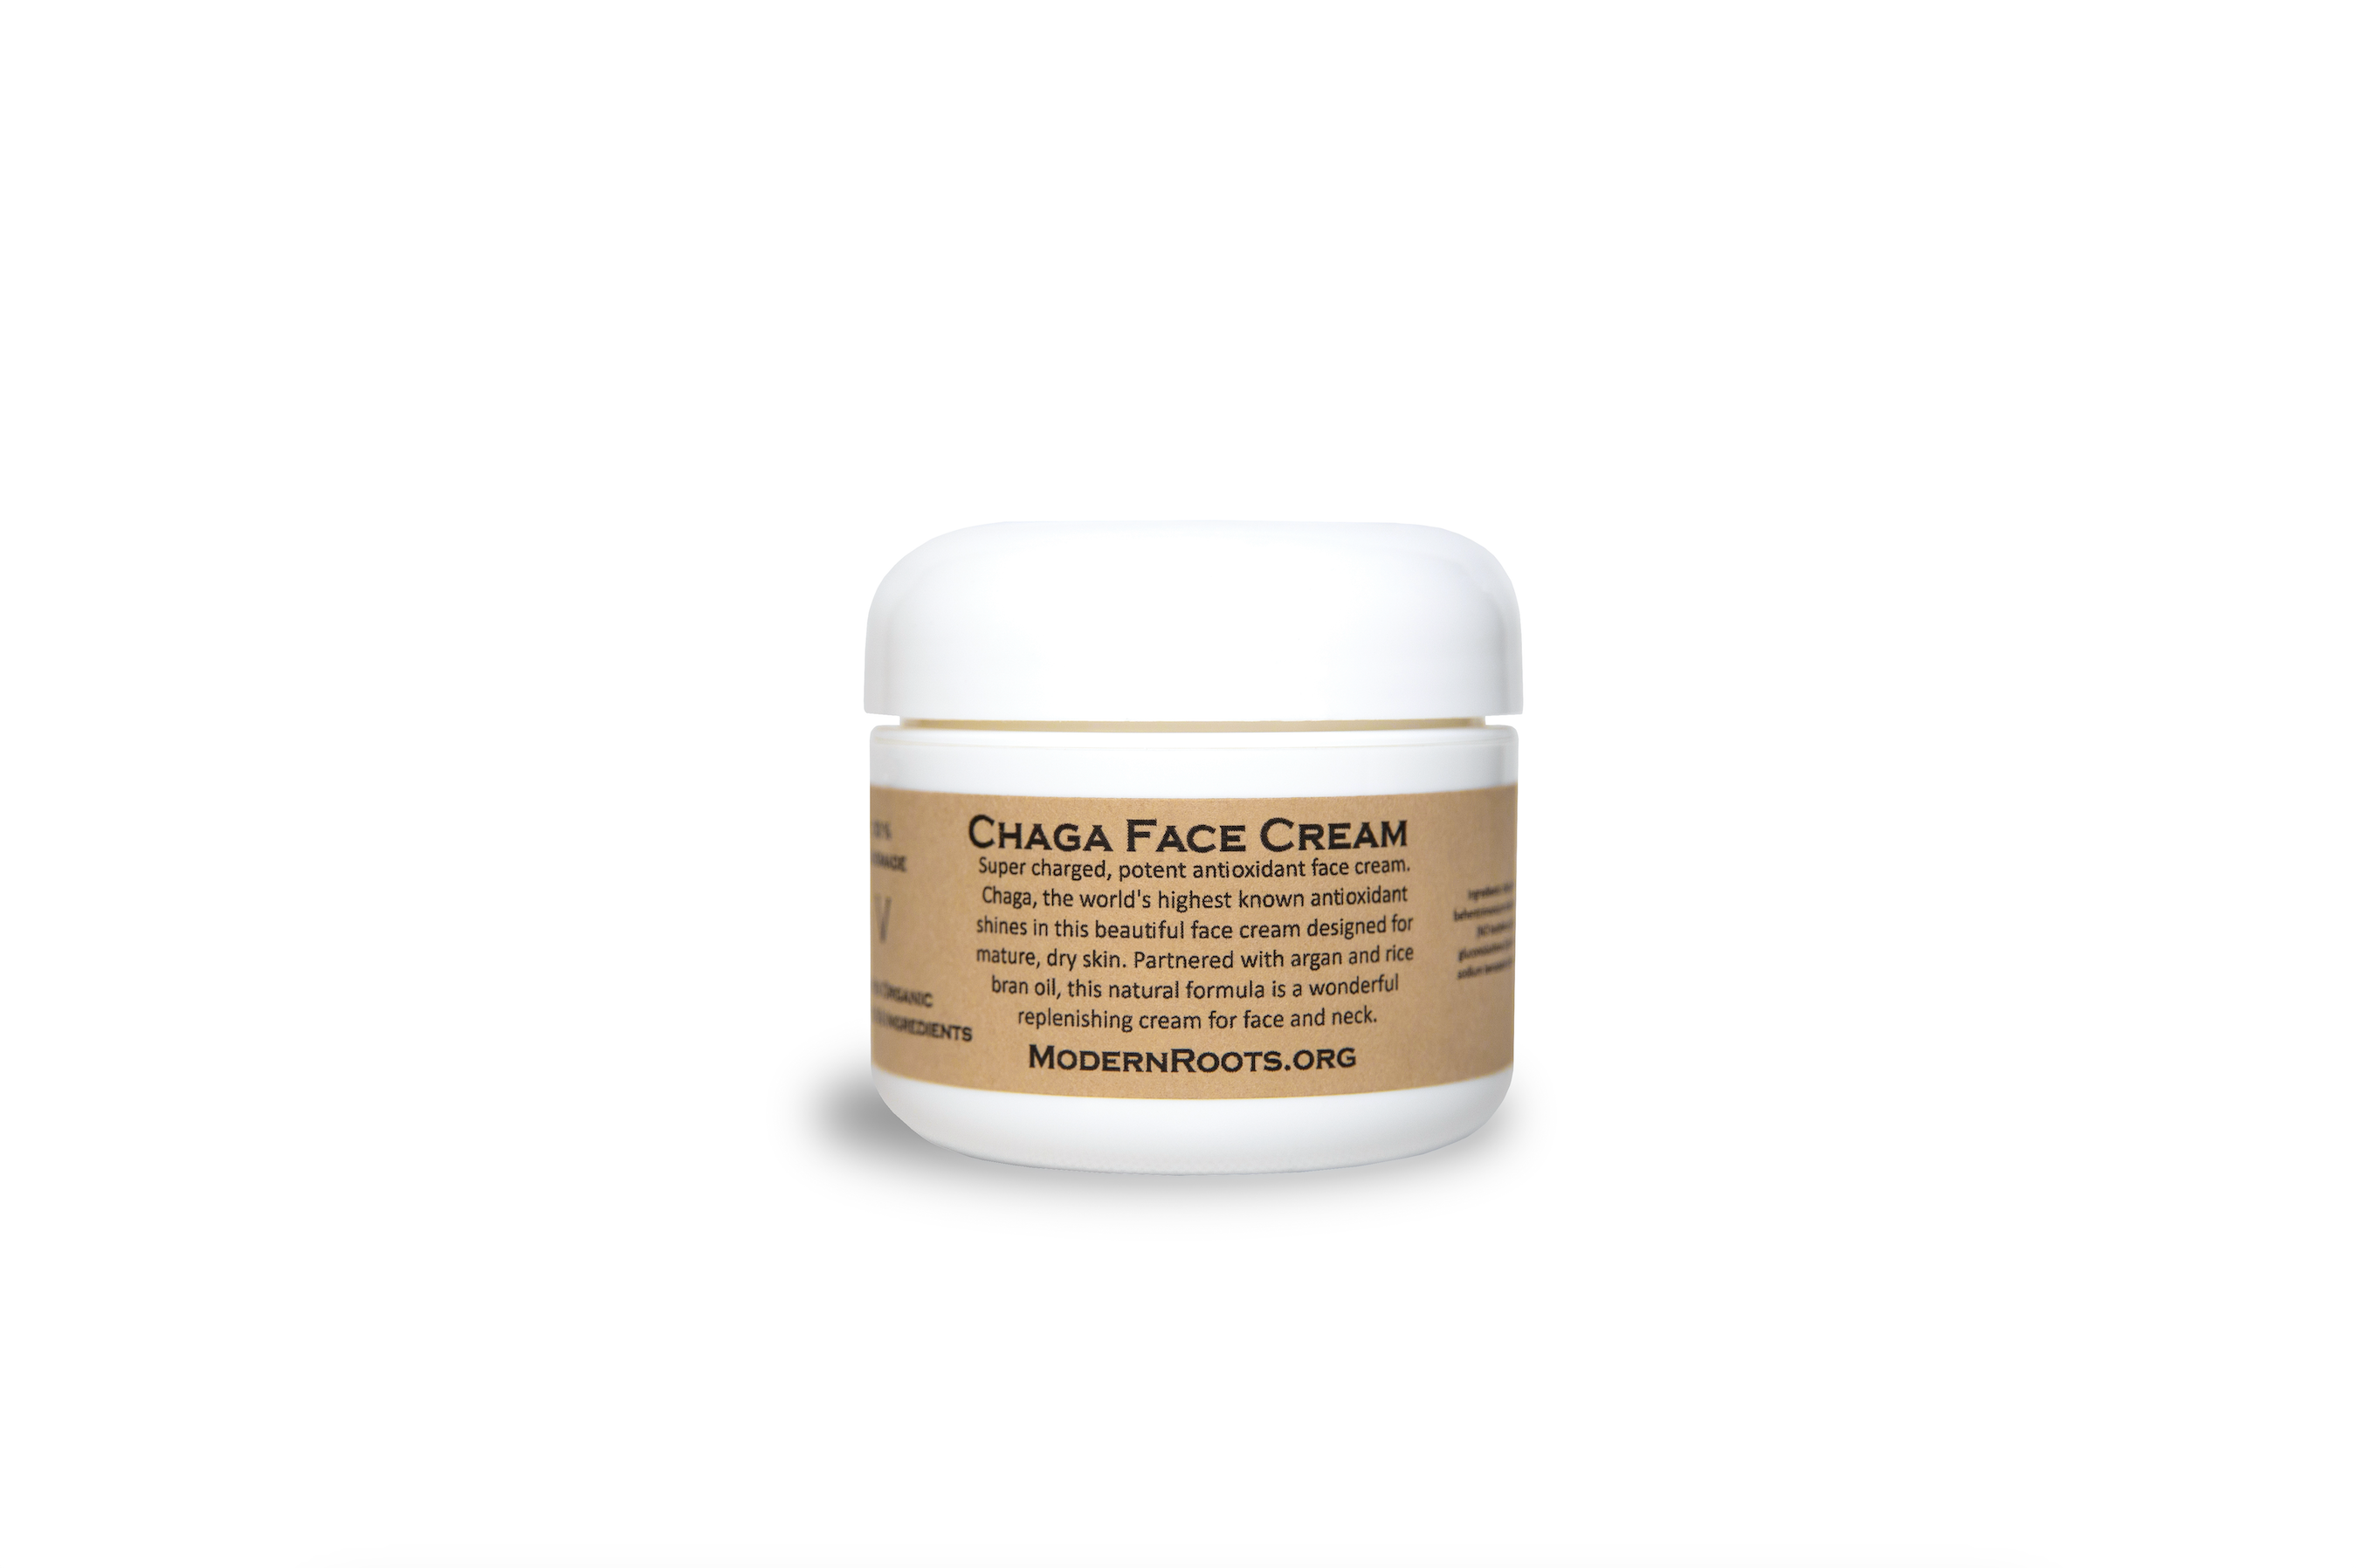 Chaga Face Cream